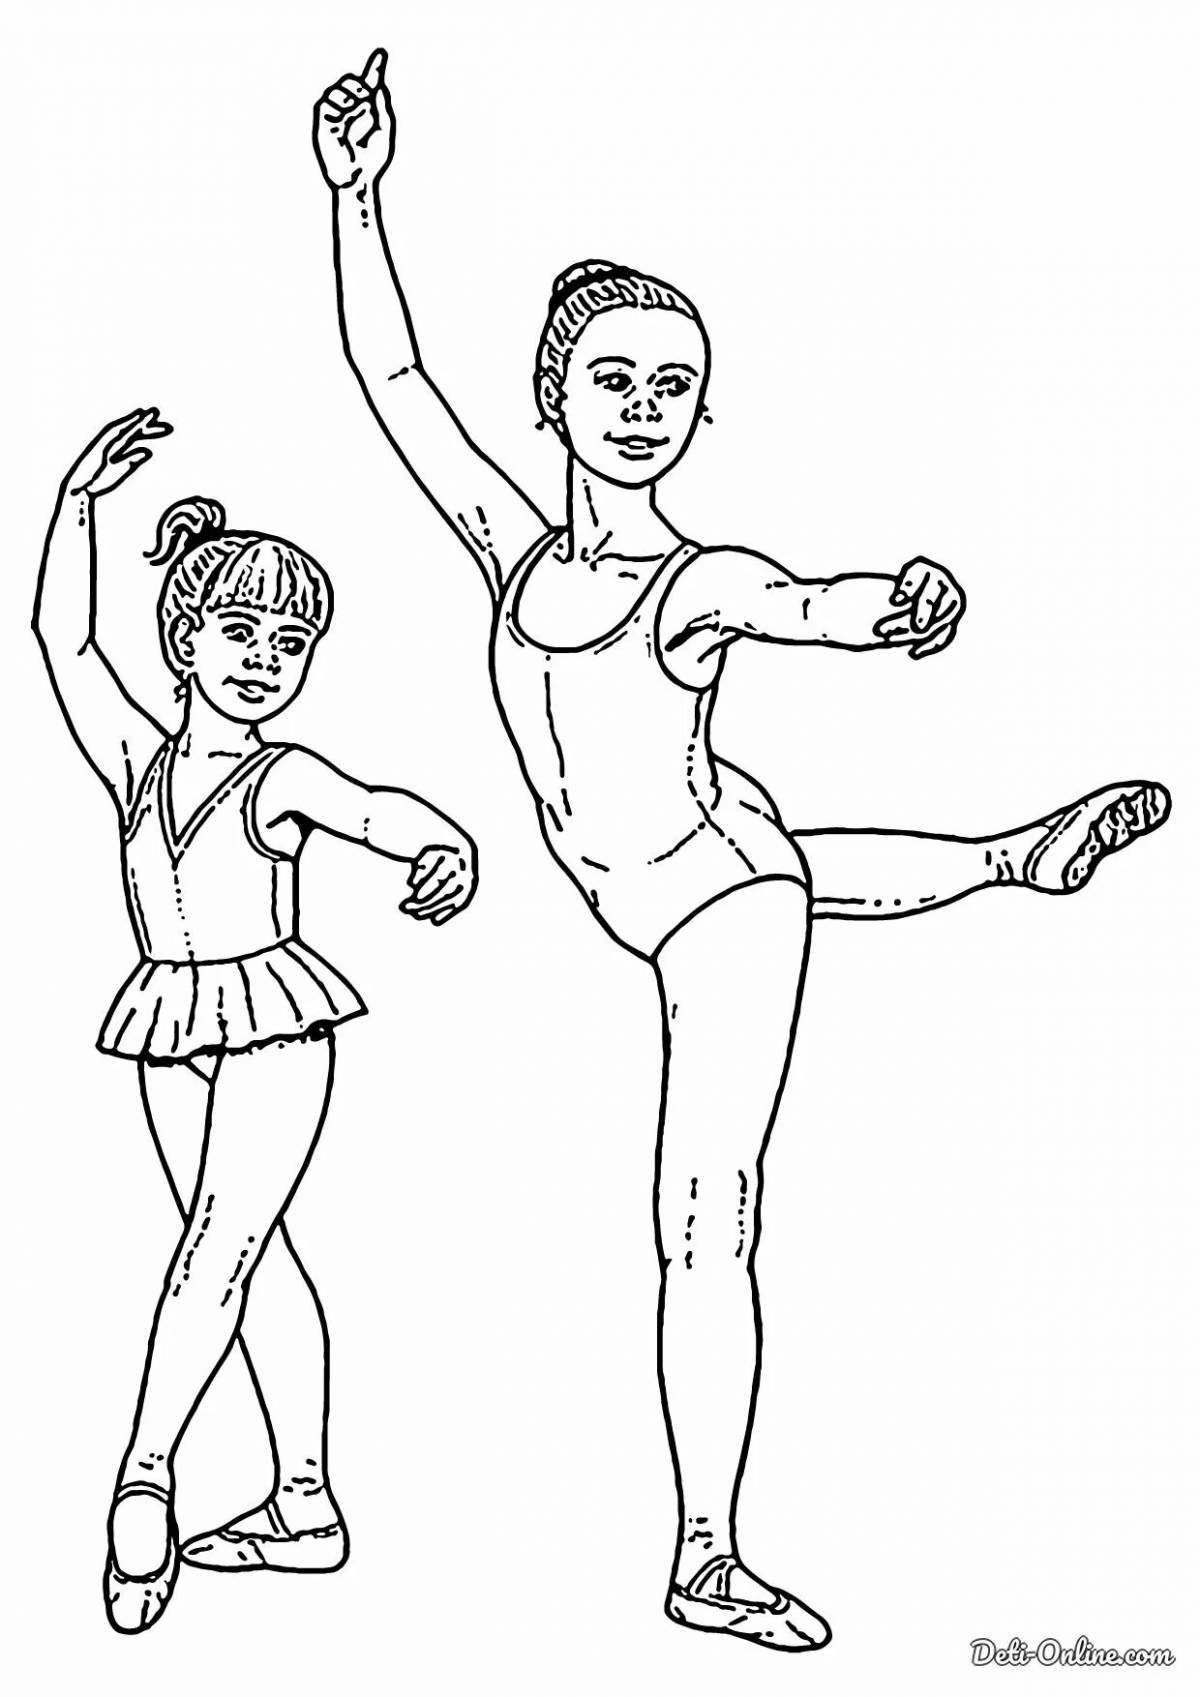 A fun gymnastics coloring book for girls